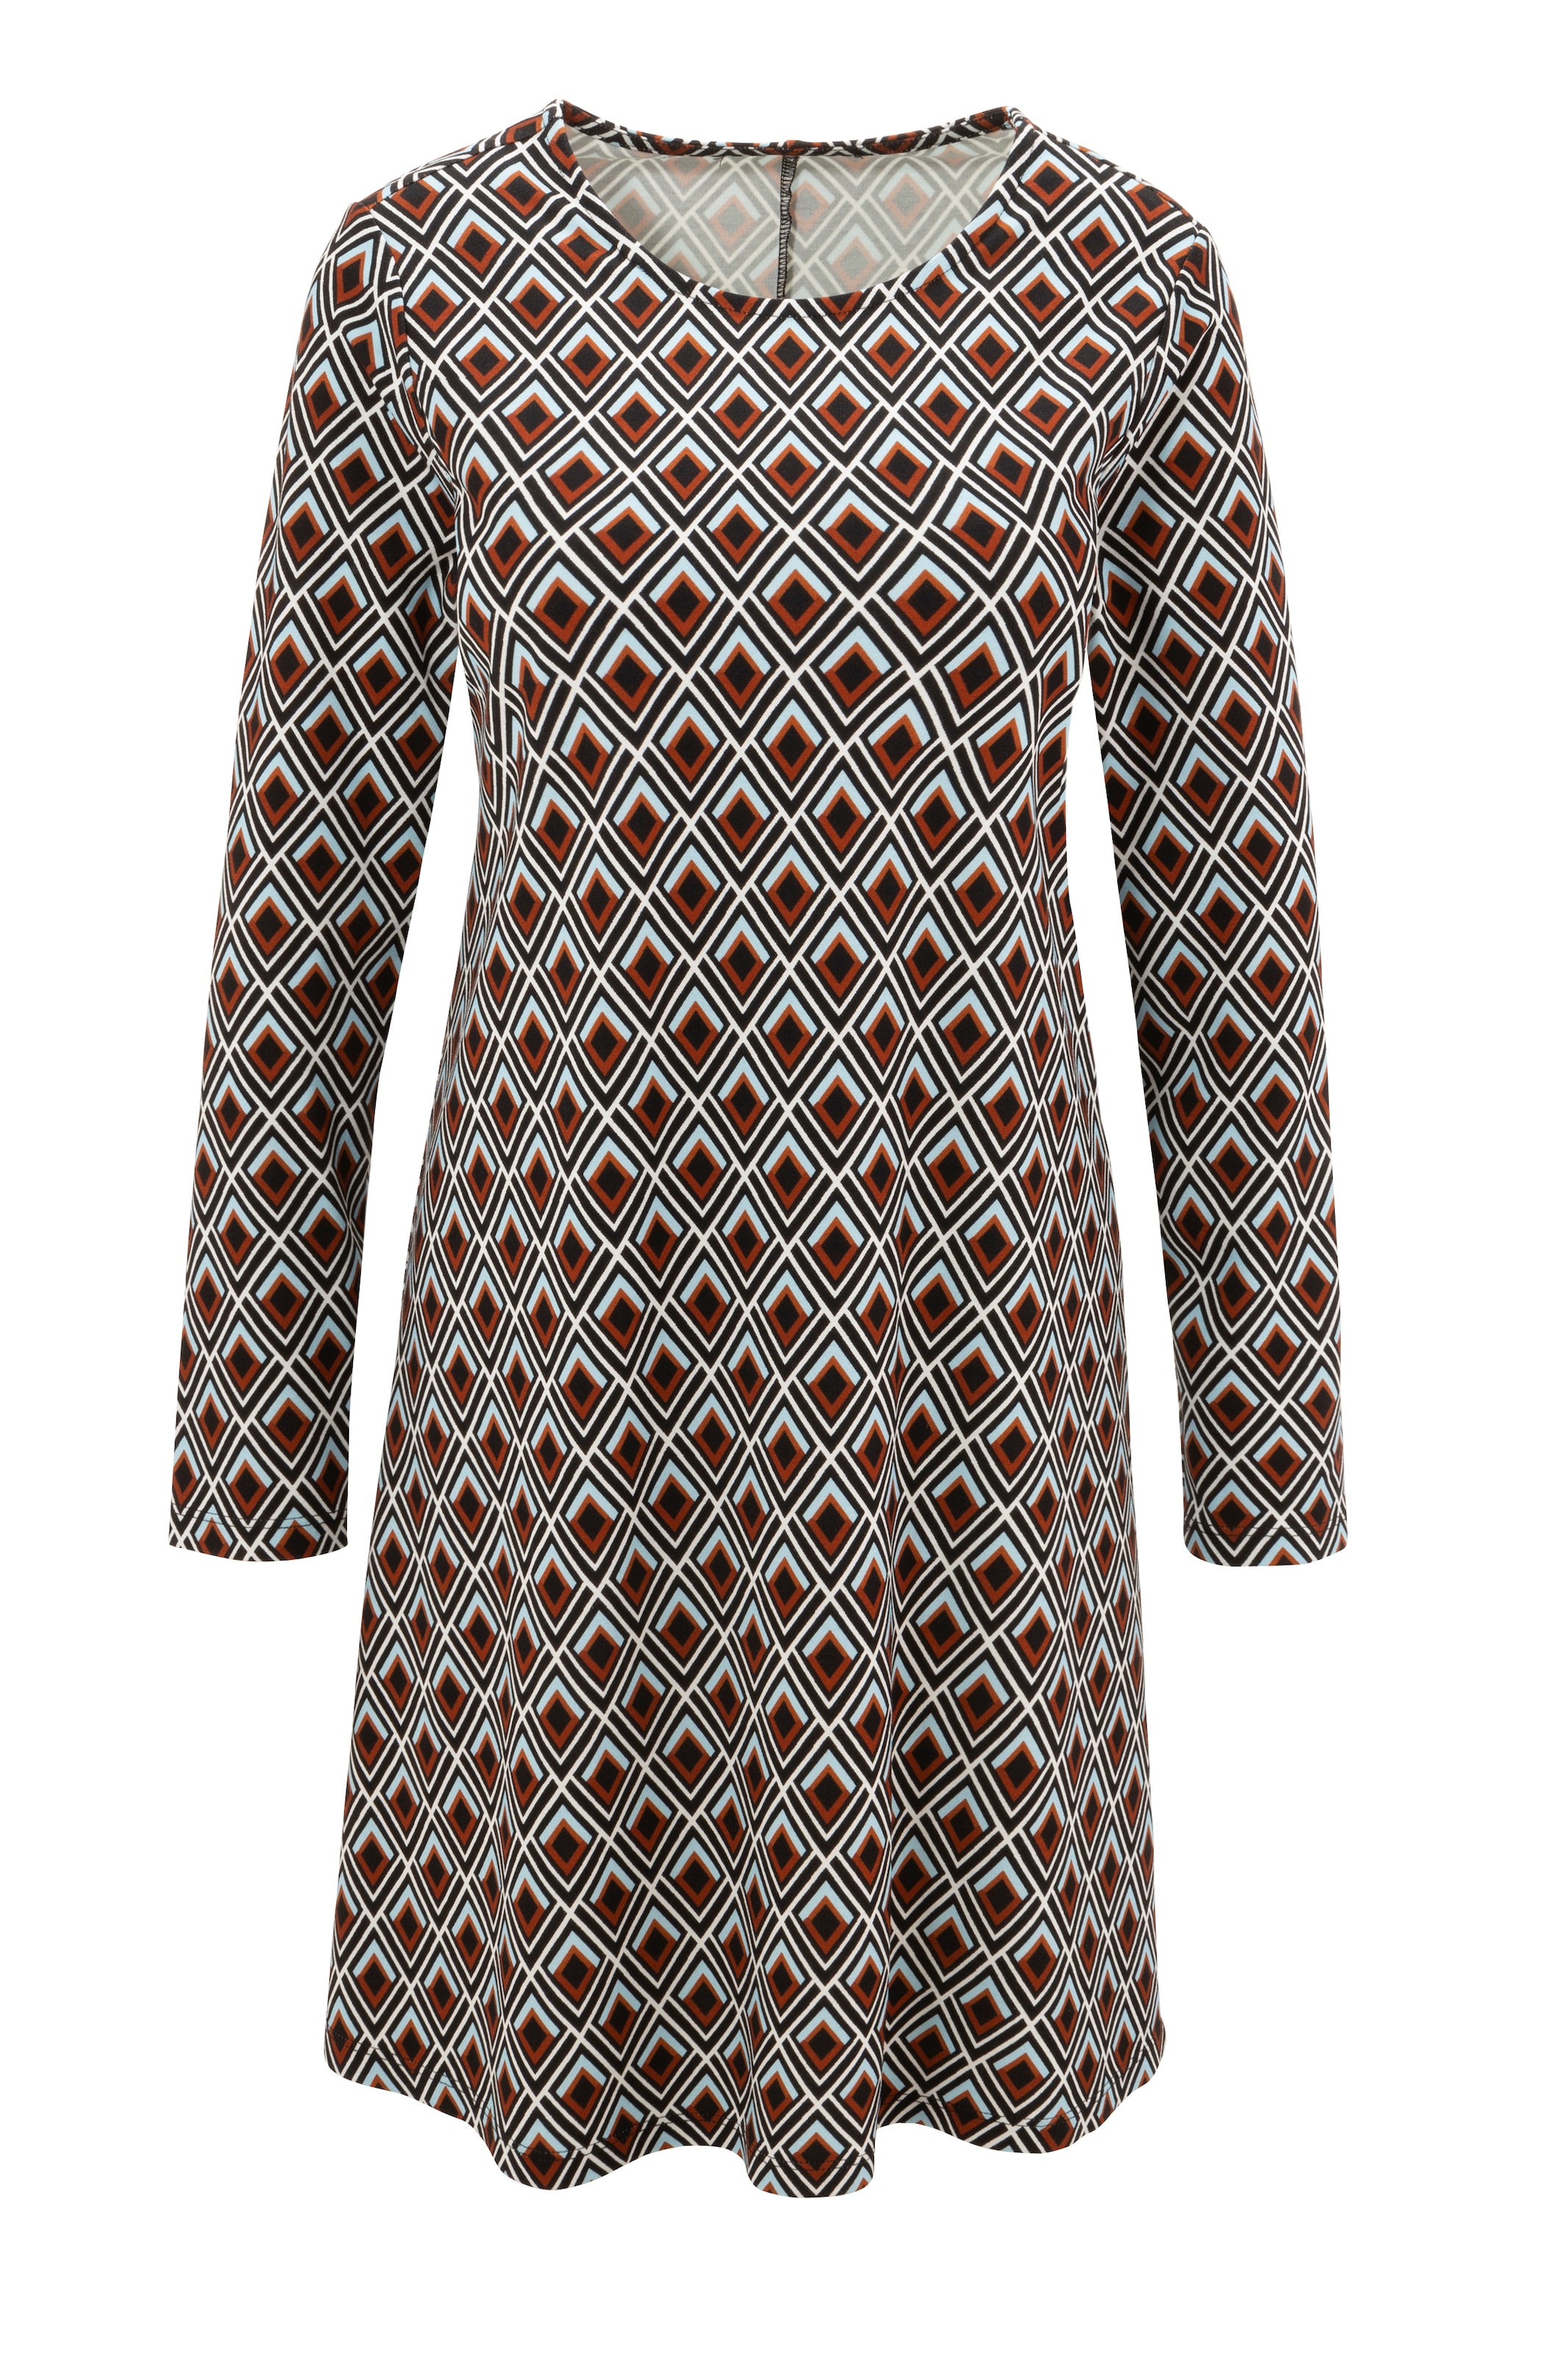 Aniston SELECTED Jerseykleid, leichter A-Linien-Form kaufen in